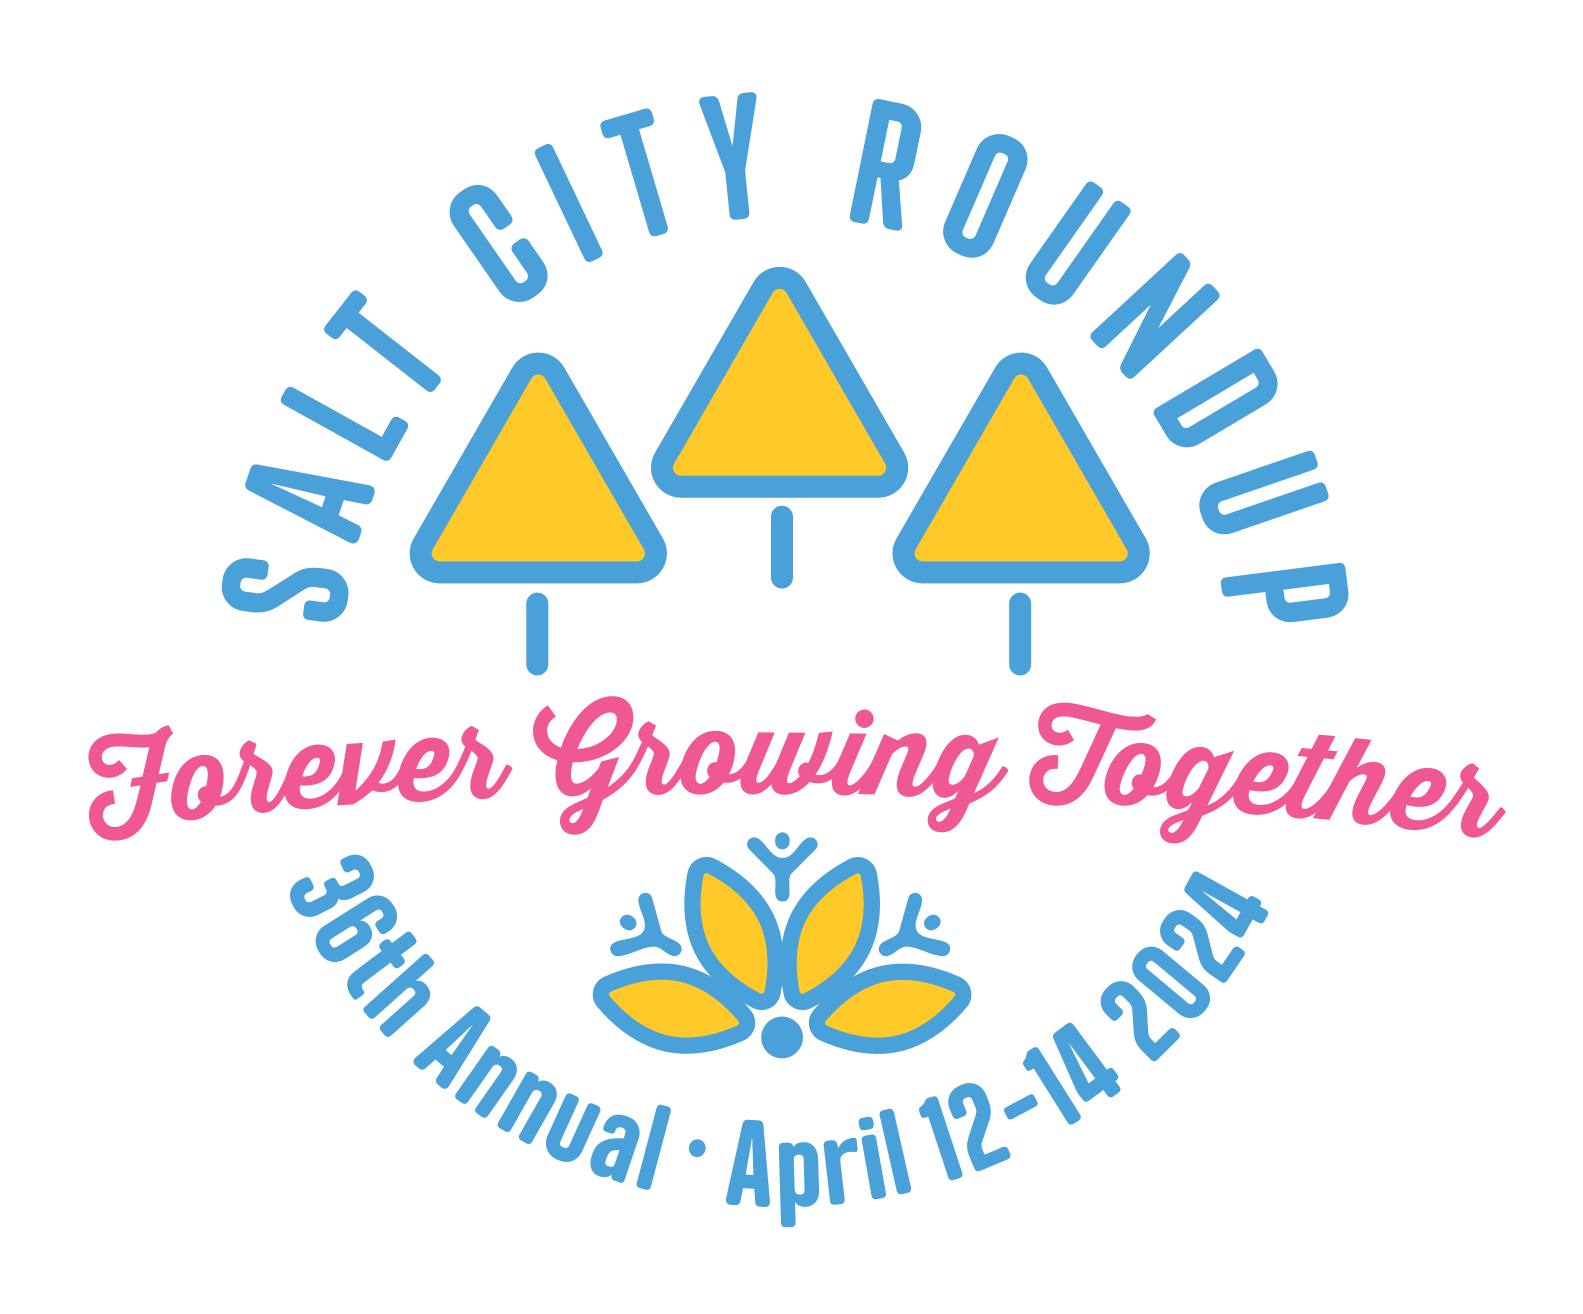 36th Salt City Roundup